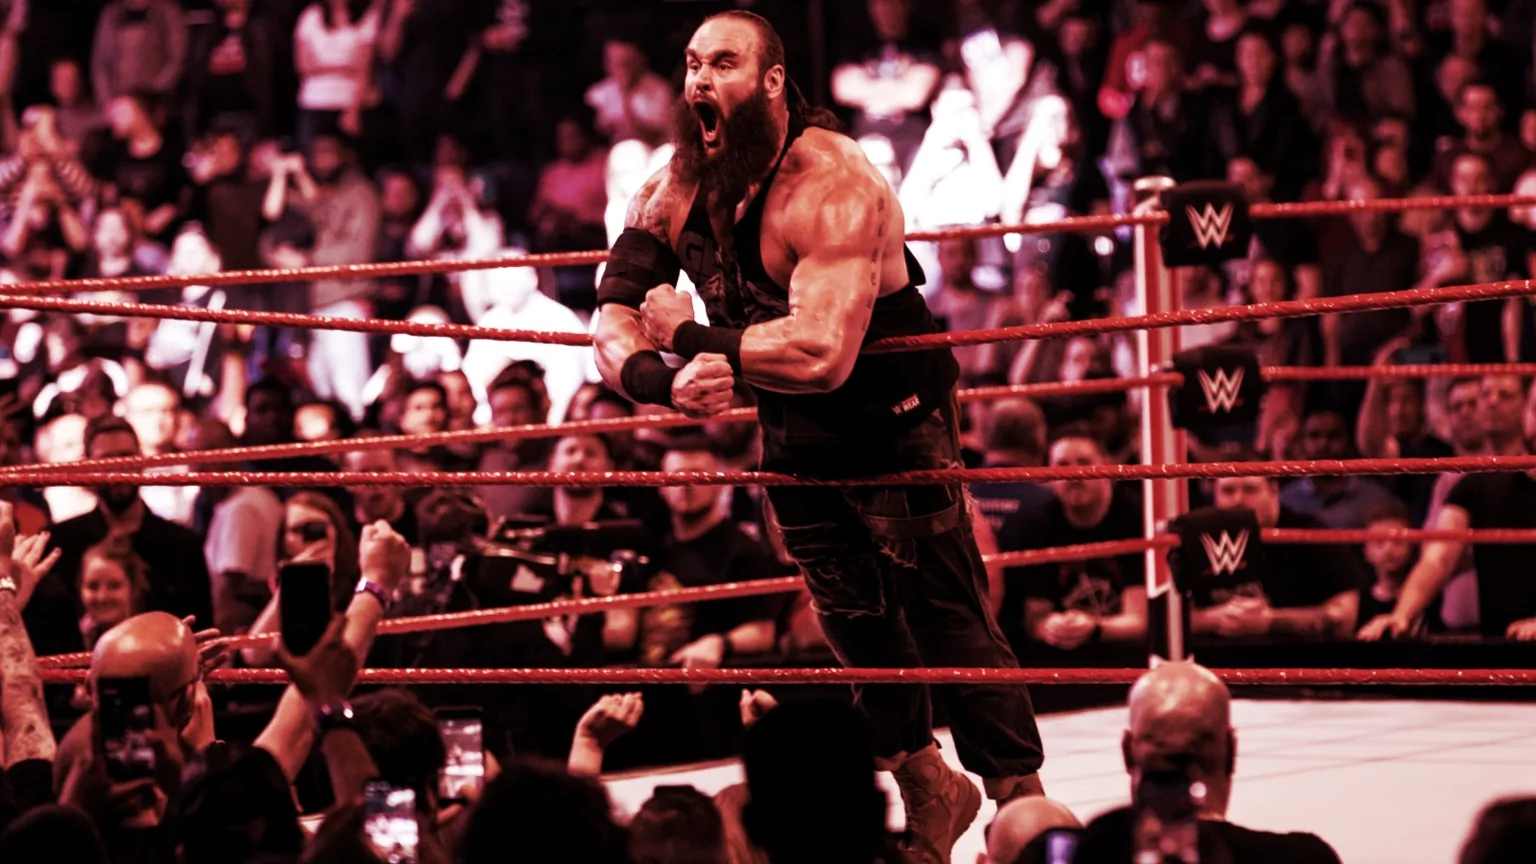 WWE Monday Night Raw at 02 Arena, London, May 13, 2019. Image: Shutterstock